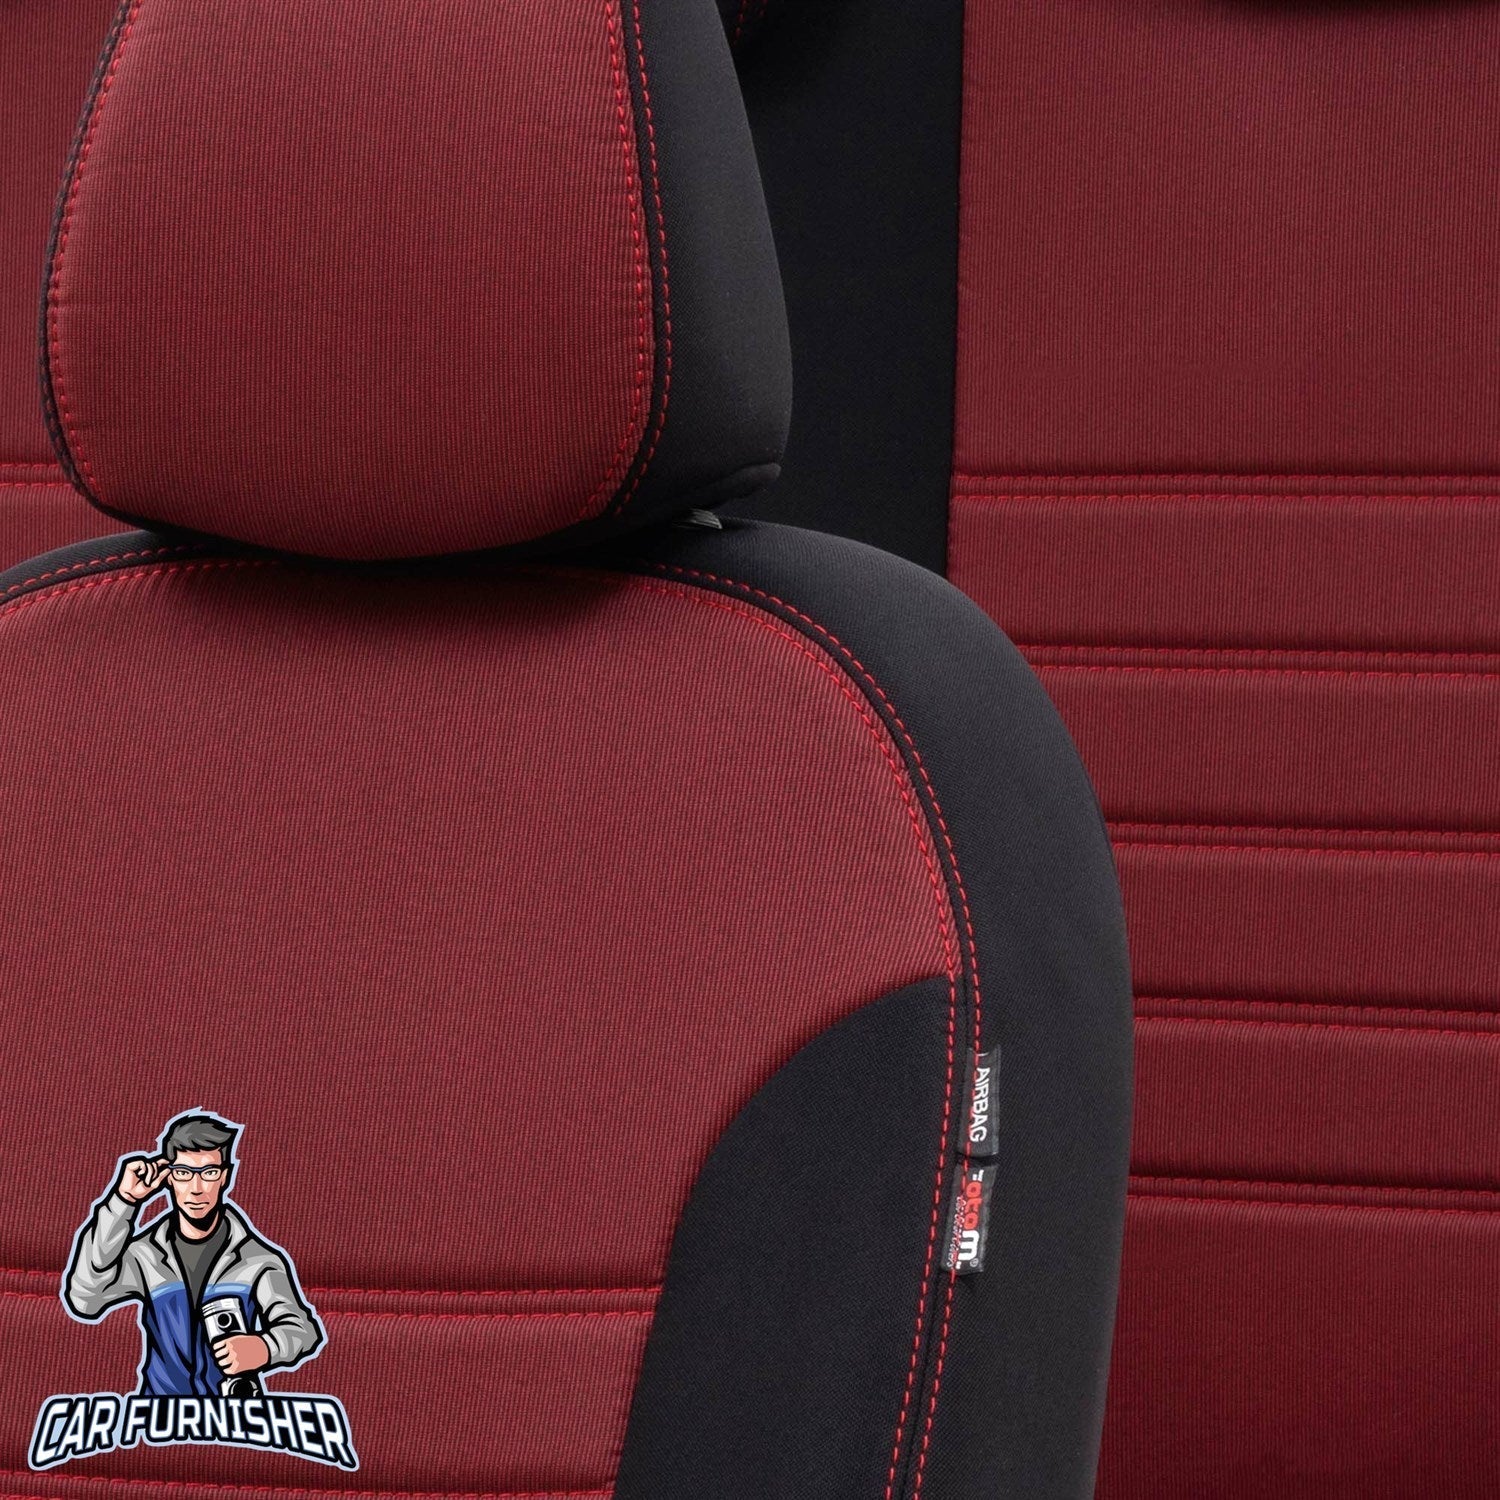 Ford Mondeo Seat Covers Original Jacquard Design Red Jacquard Fabric